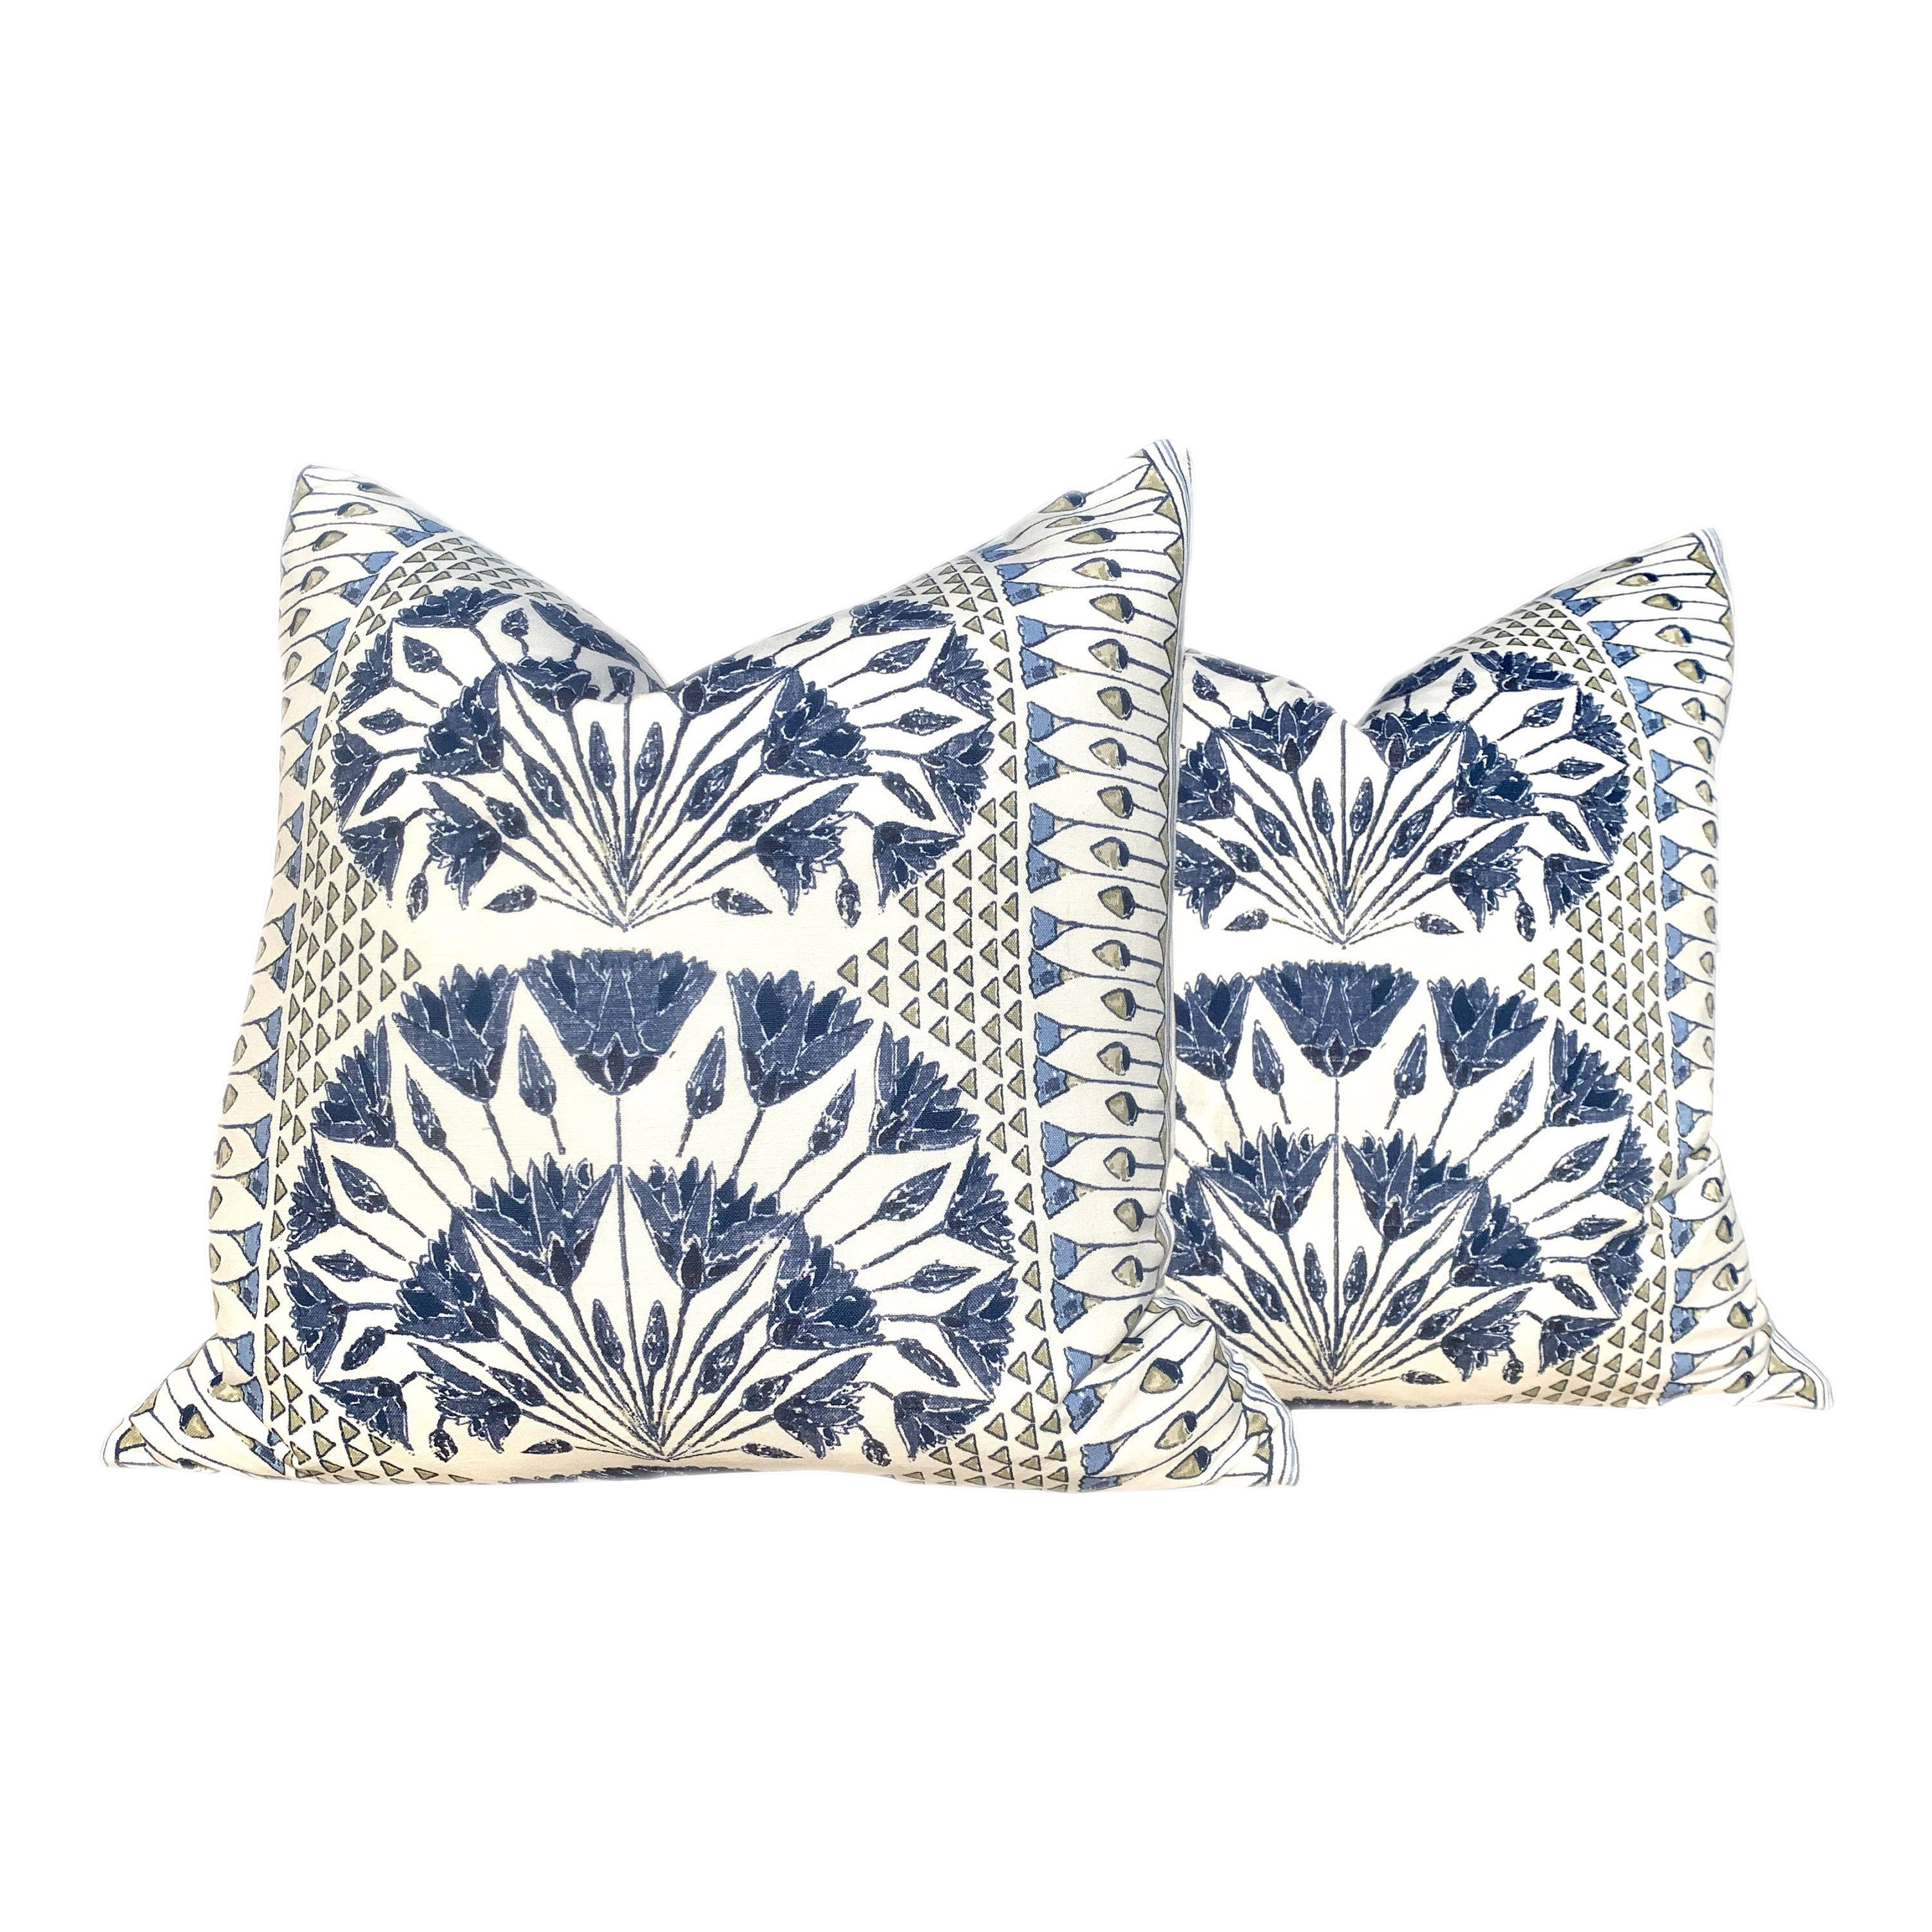 Anna French Cairo pillow cover Blue and White. Designer pillow Cover Decorative cushion 18x18, 20x20, 22x22, Euro Sham lumbar pillow